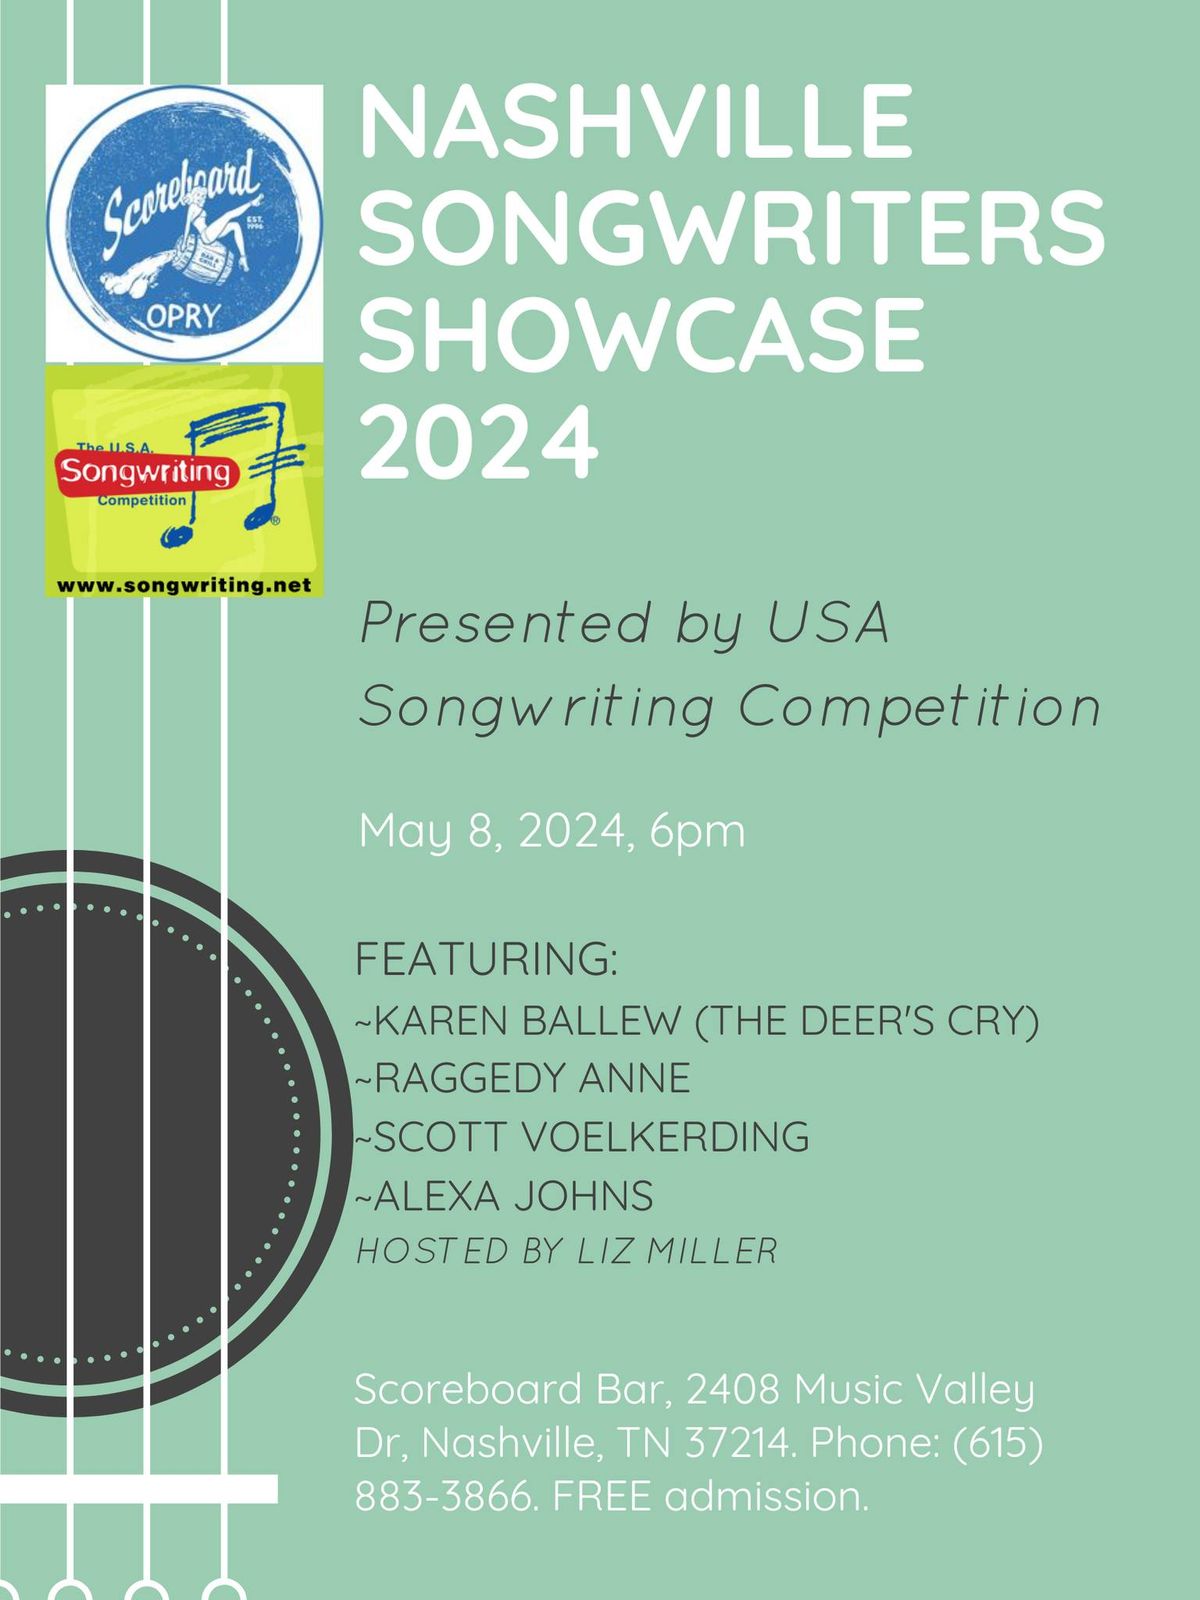 Nashville Songwriters Showcase 2024